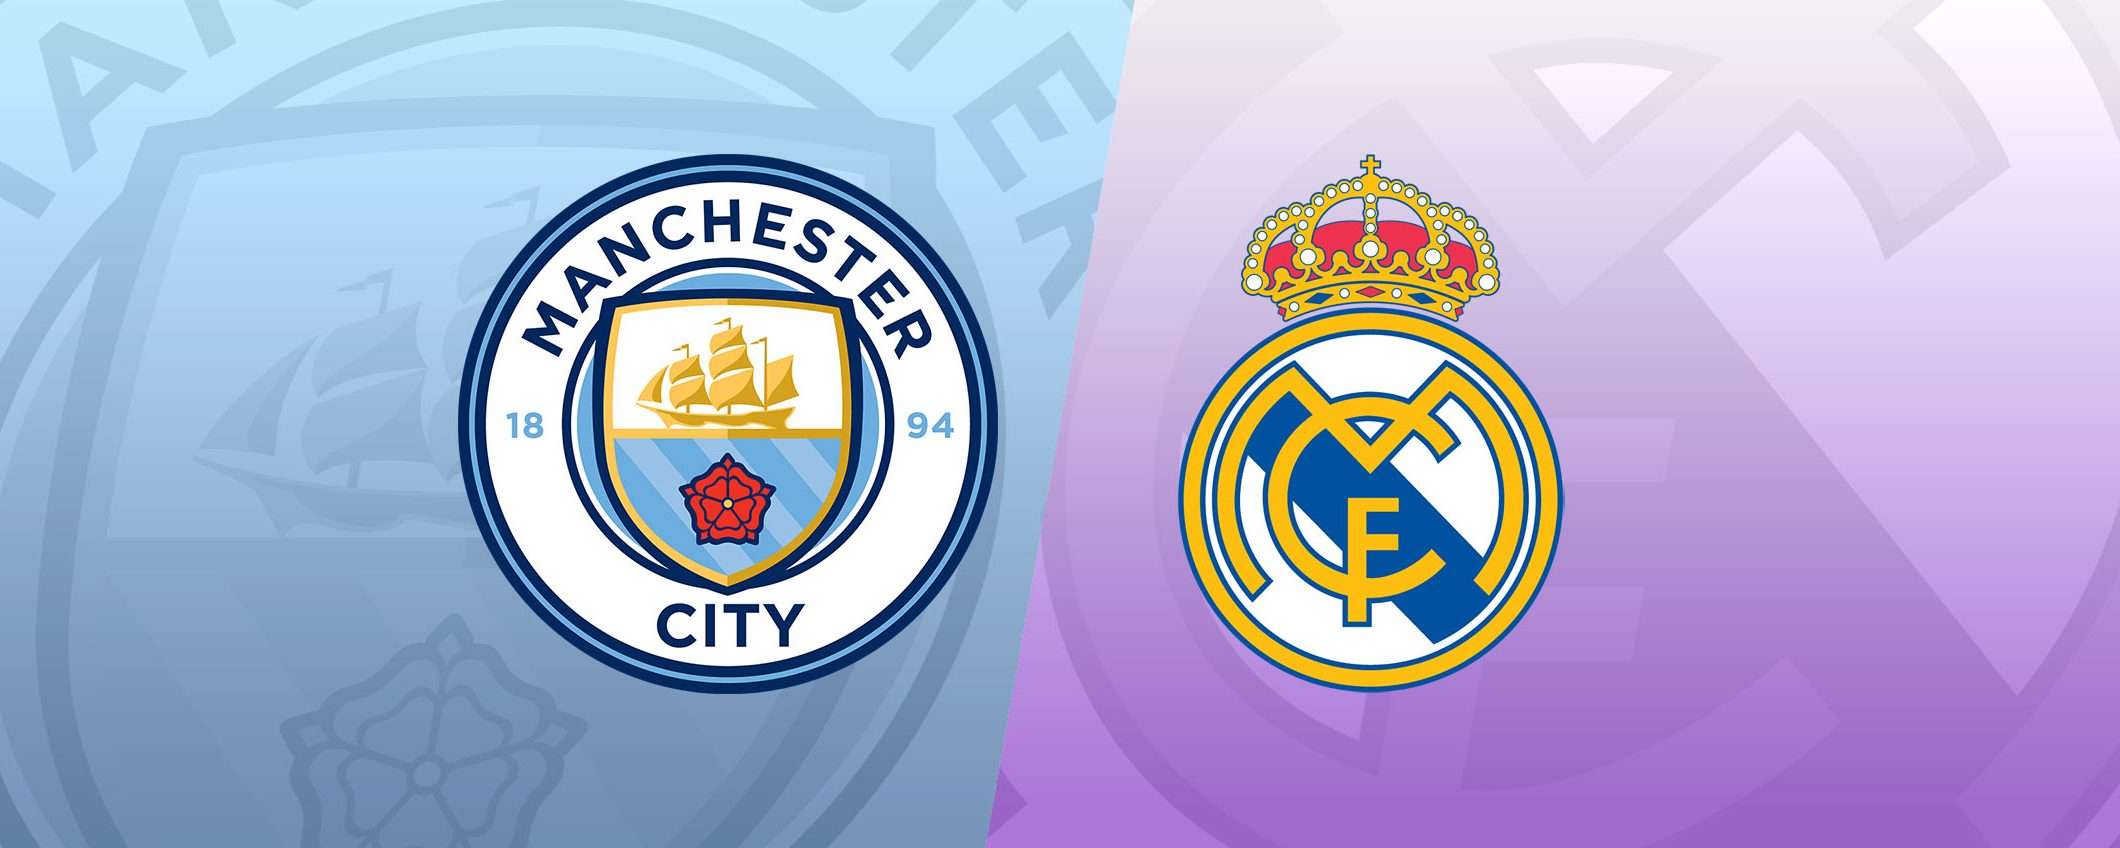 Manchester City-Real Madrid: dove vederla in streaming